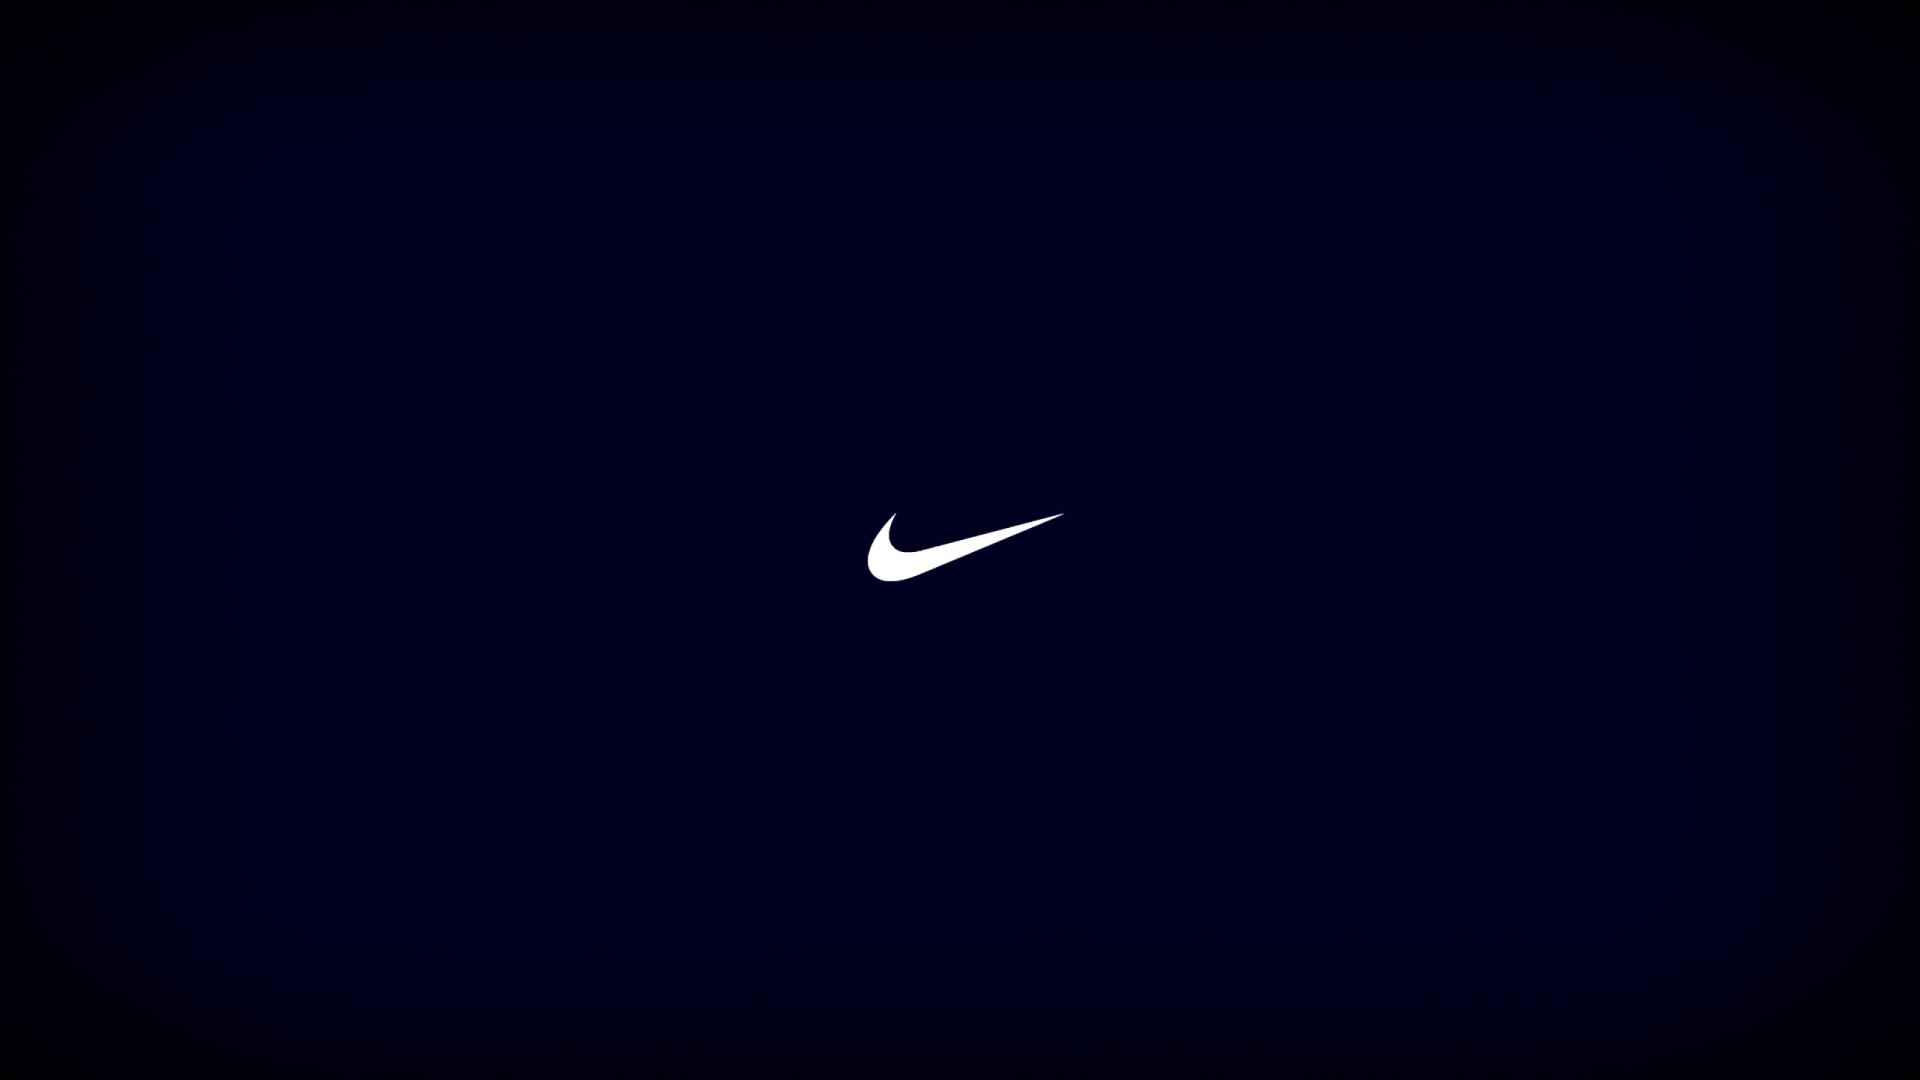 Nike Logo On The Blue Background Wallpaper Des